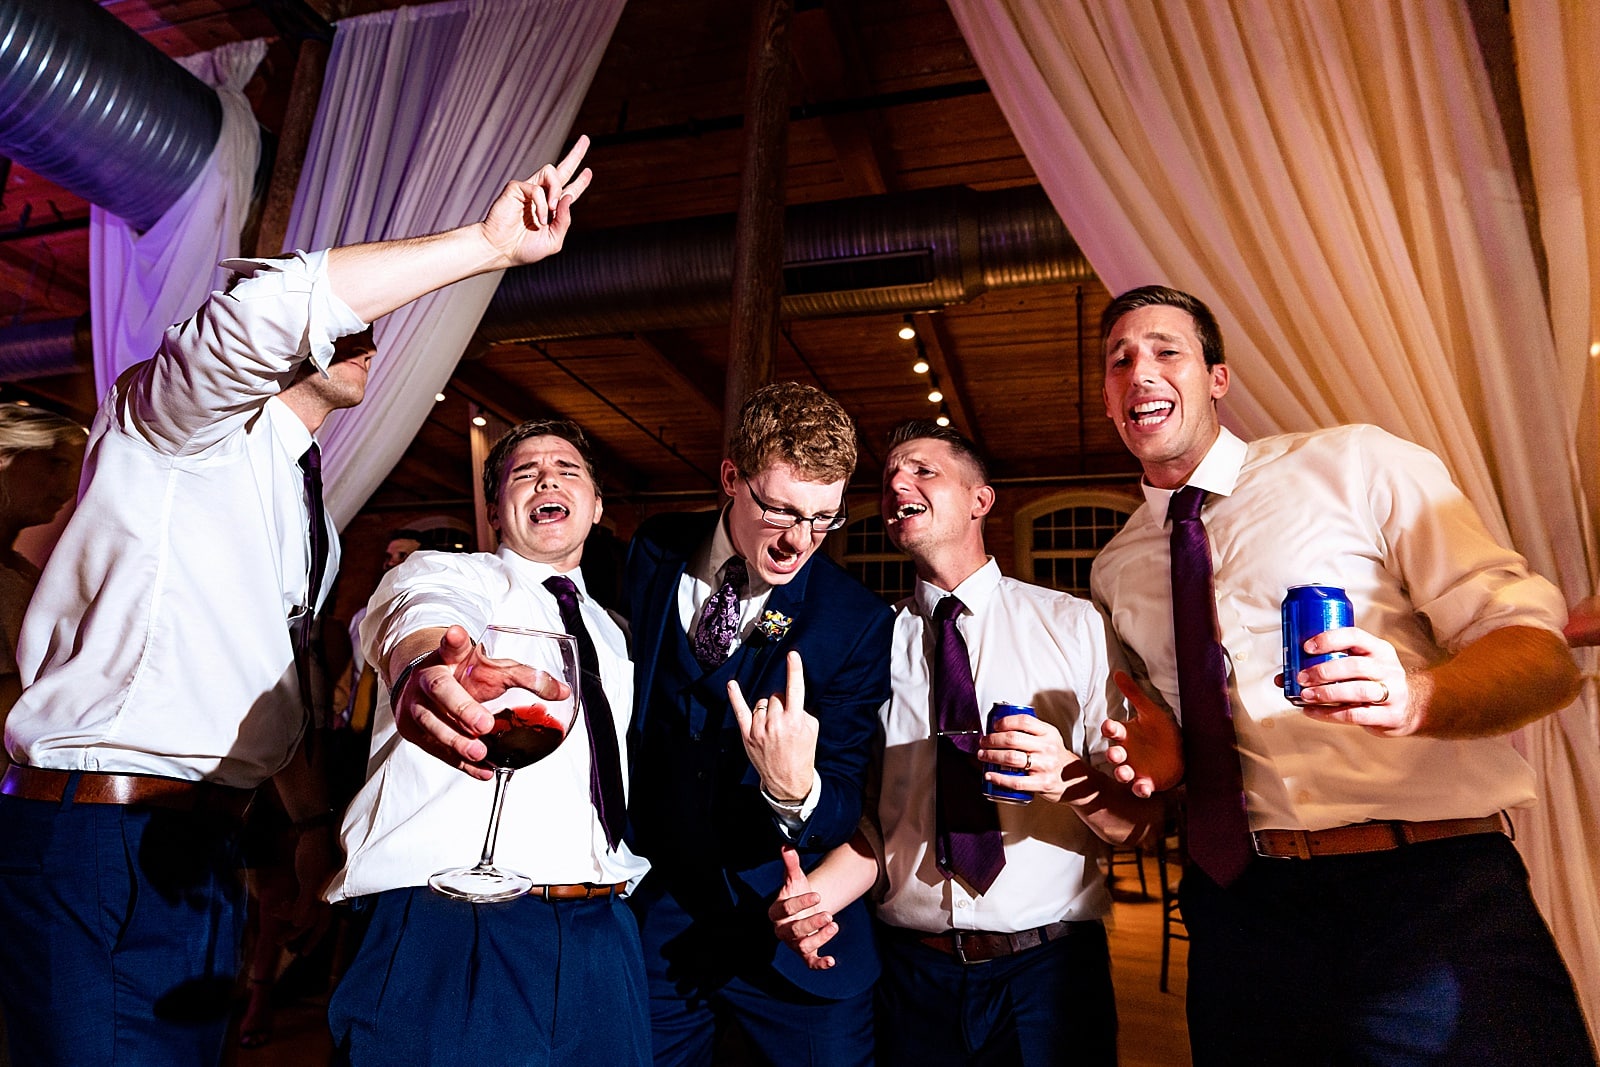 When your groomsmen break into Backstreet Boys serenades, you know it's a fun wedding